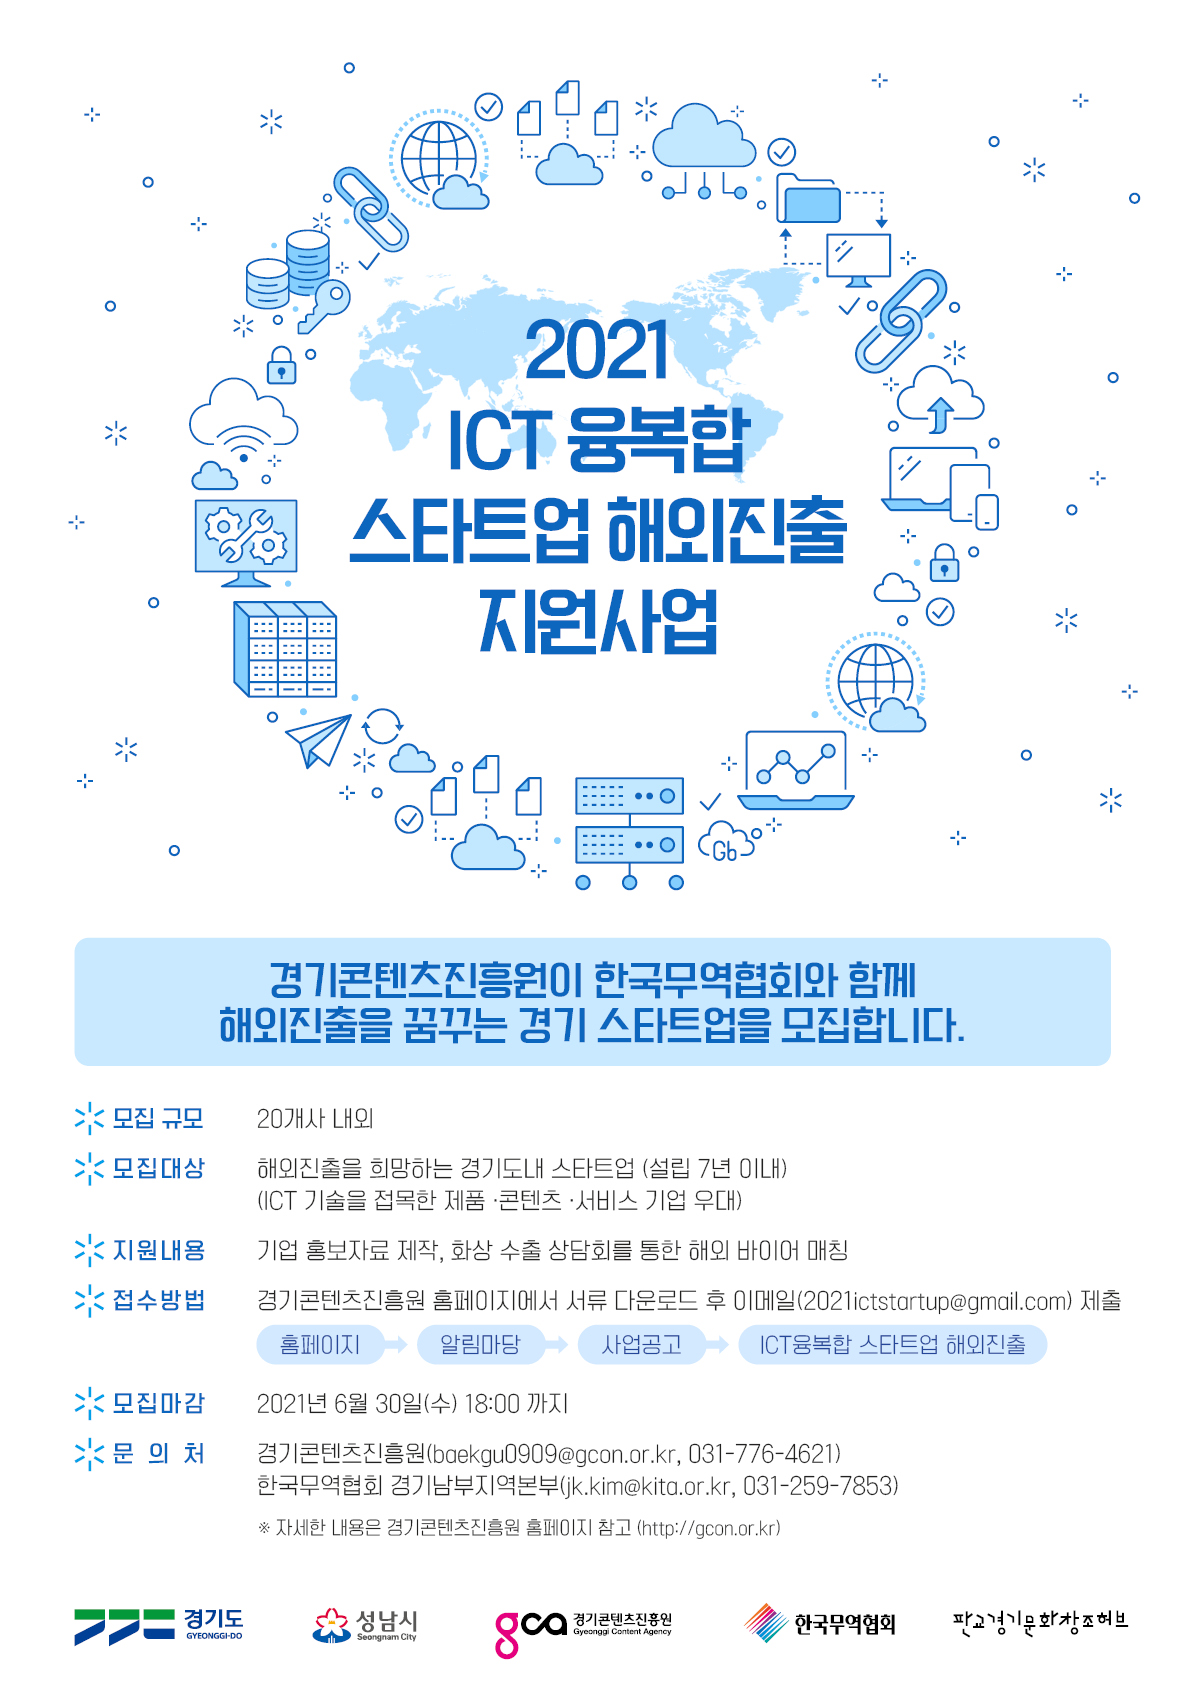 2021 ICT융복합 스타트업 해외진출 지원사업 참여기업 모집